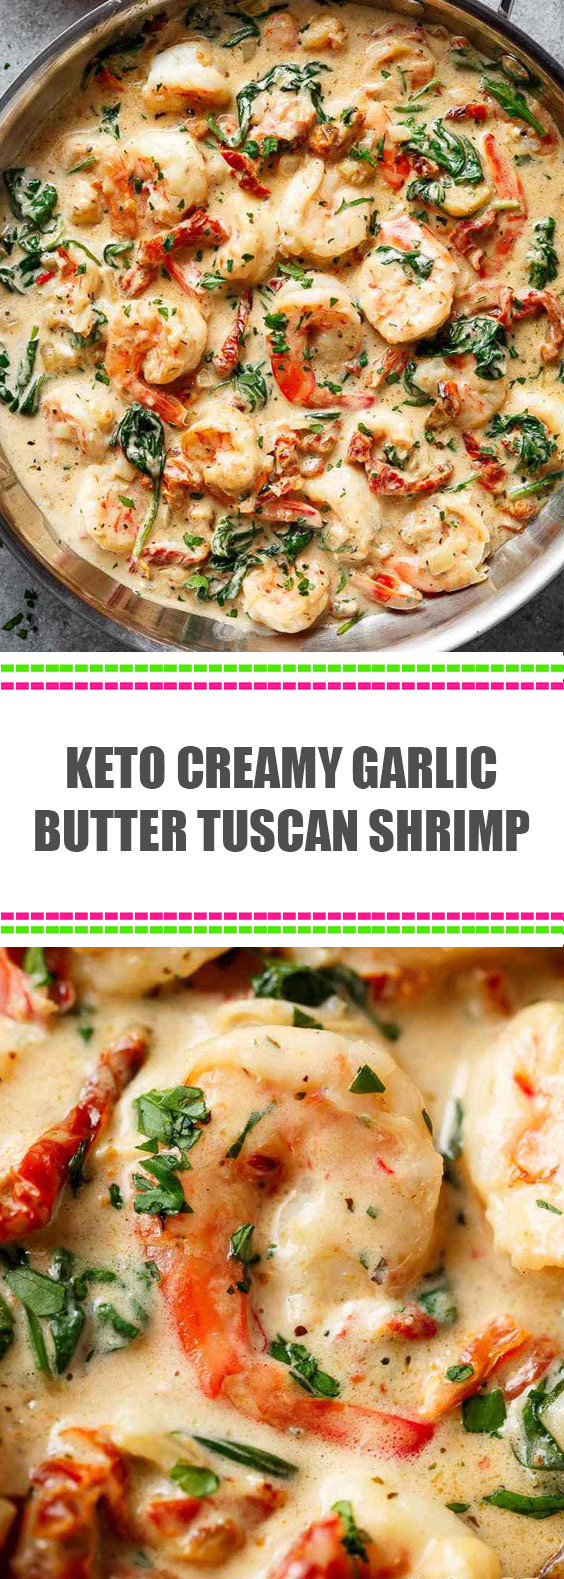 Tuscan Butter Shrimp Keto
 Keto Creamy Garlic Butter Tuscan Shrimp